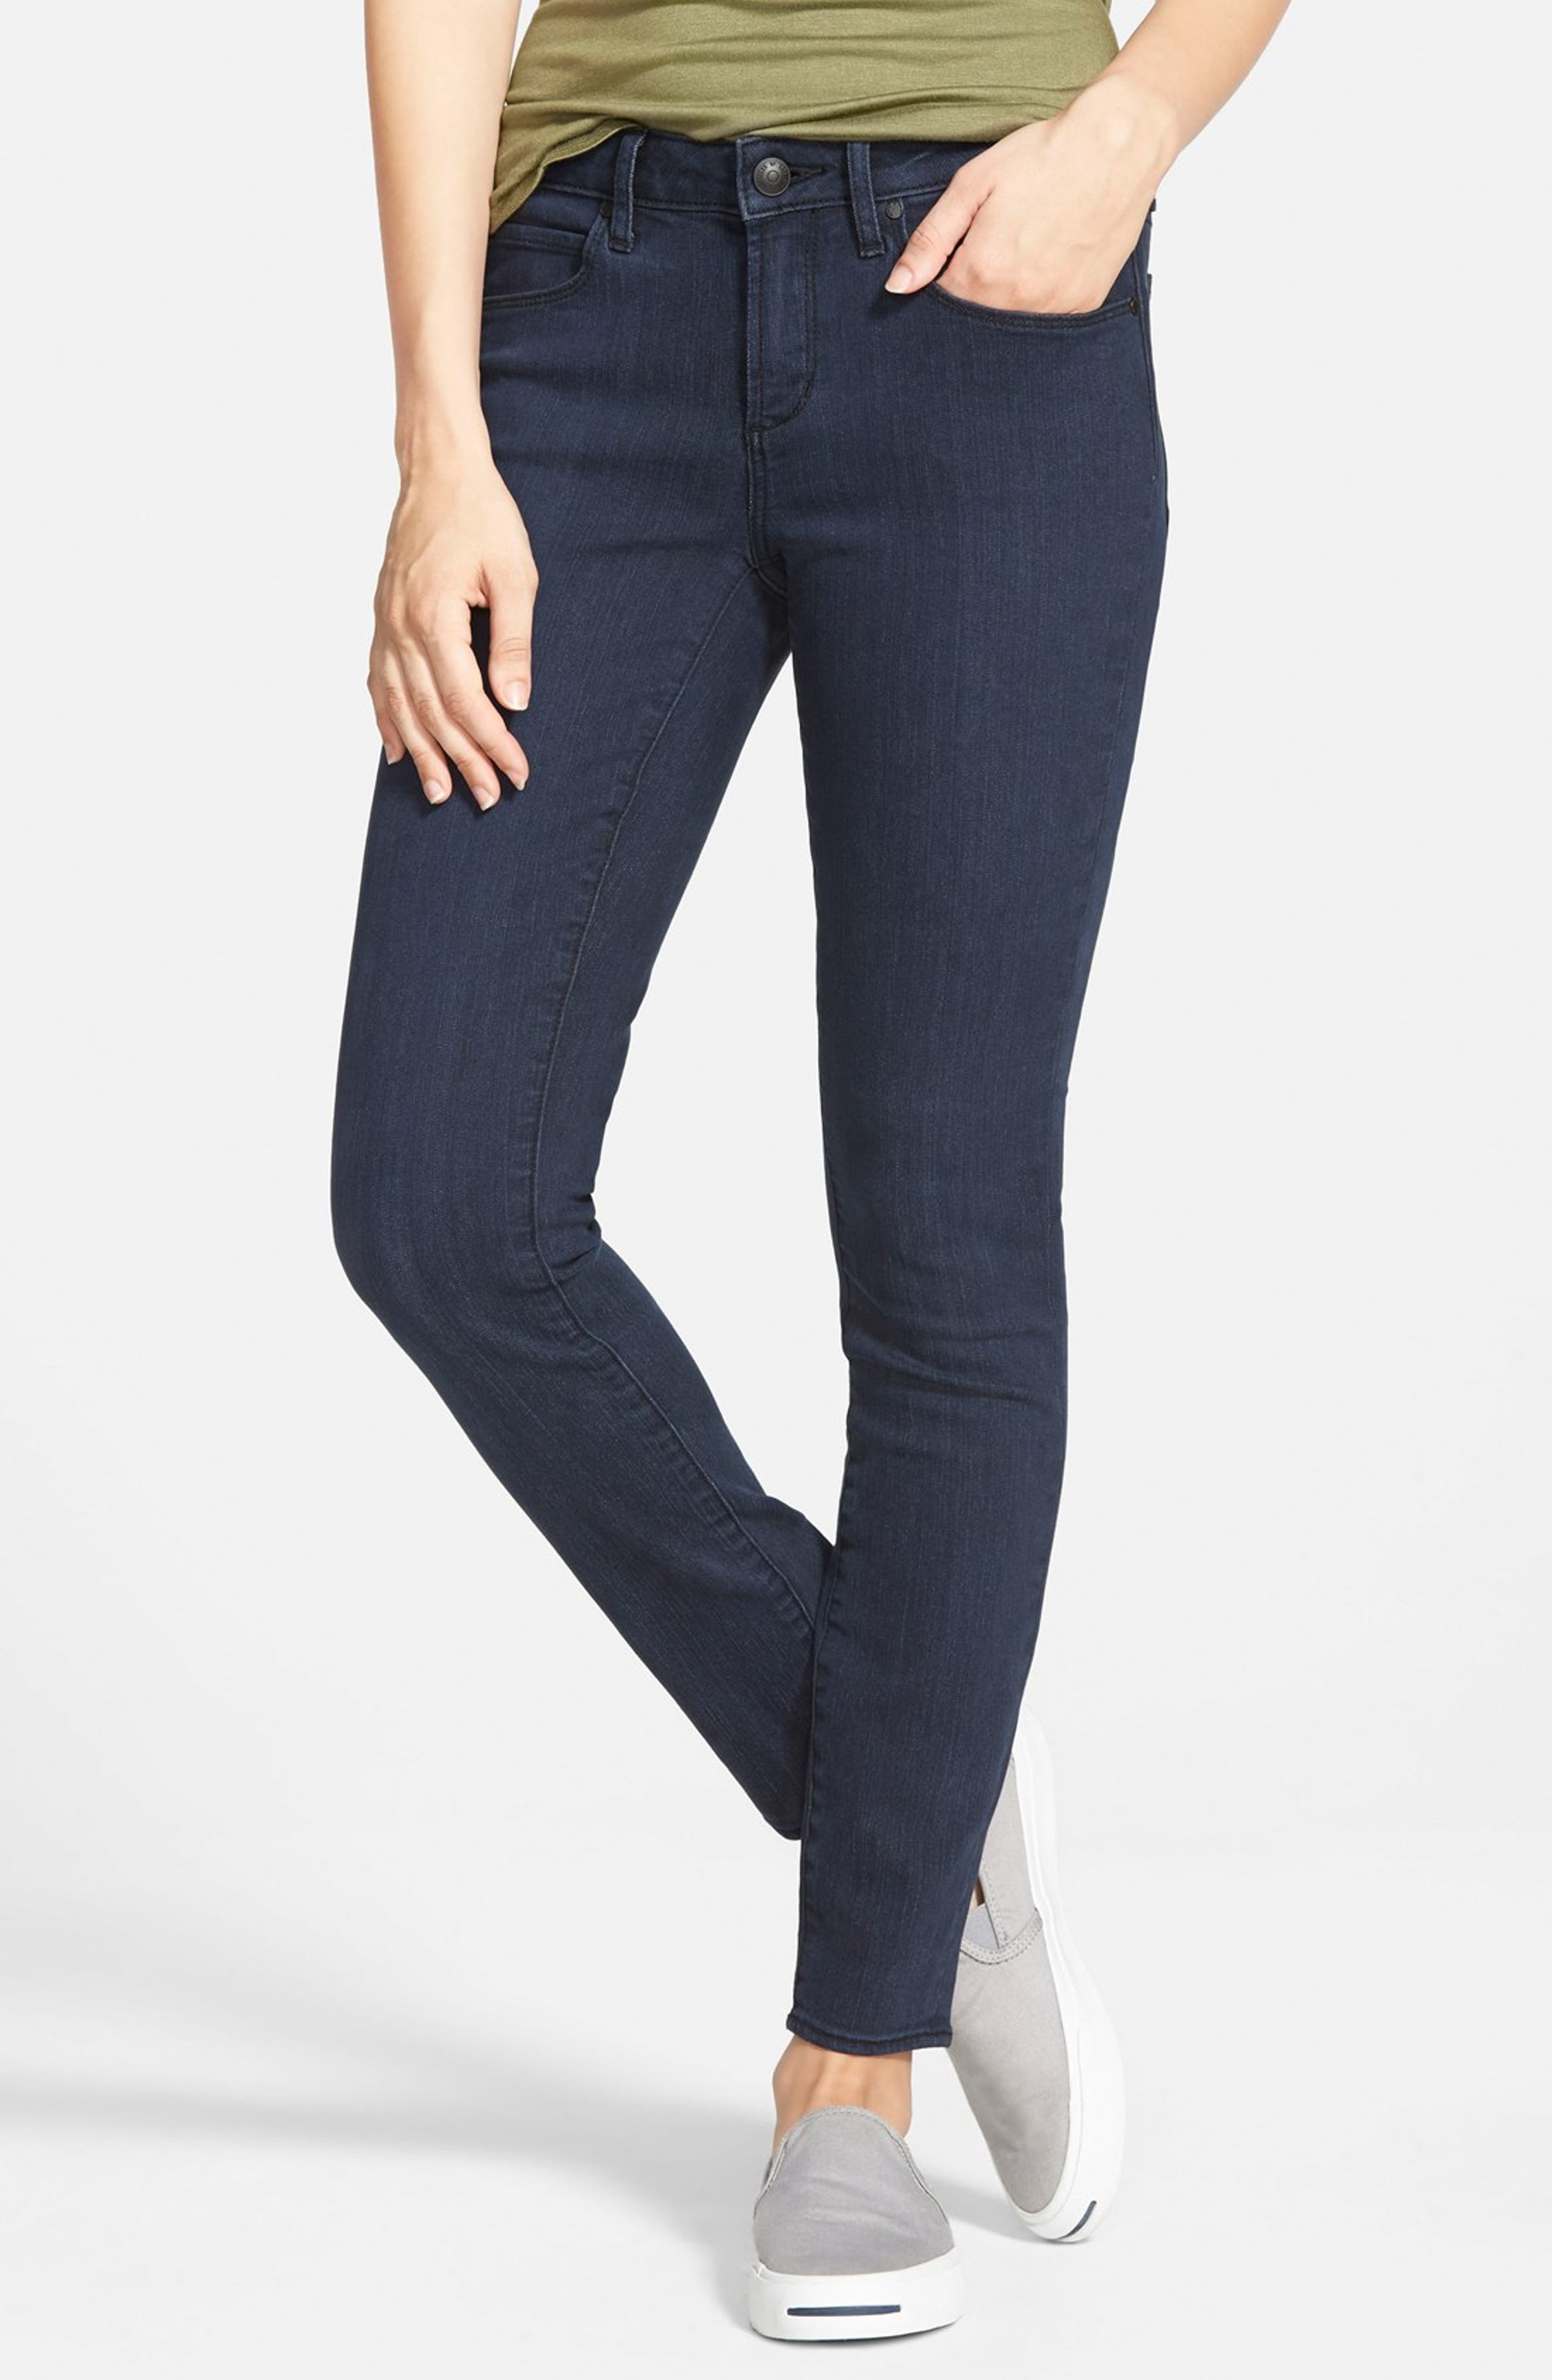 Articles of Society 'Sarah' Skinny Jeans (Medium Wash) | Nordstrom